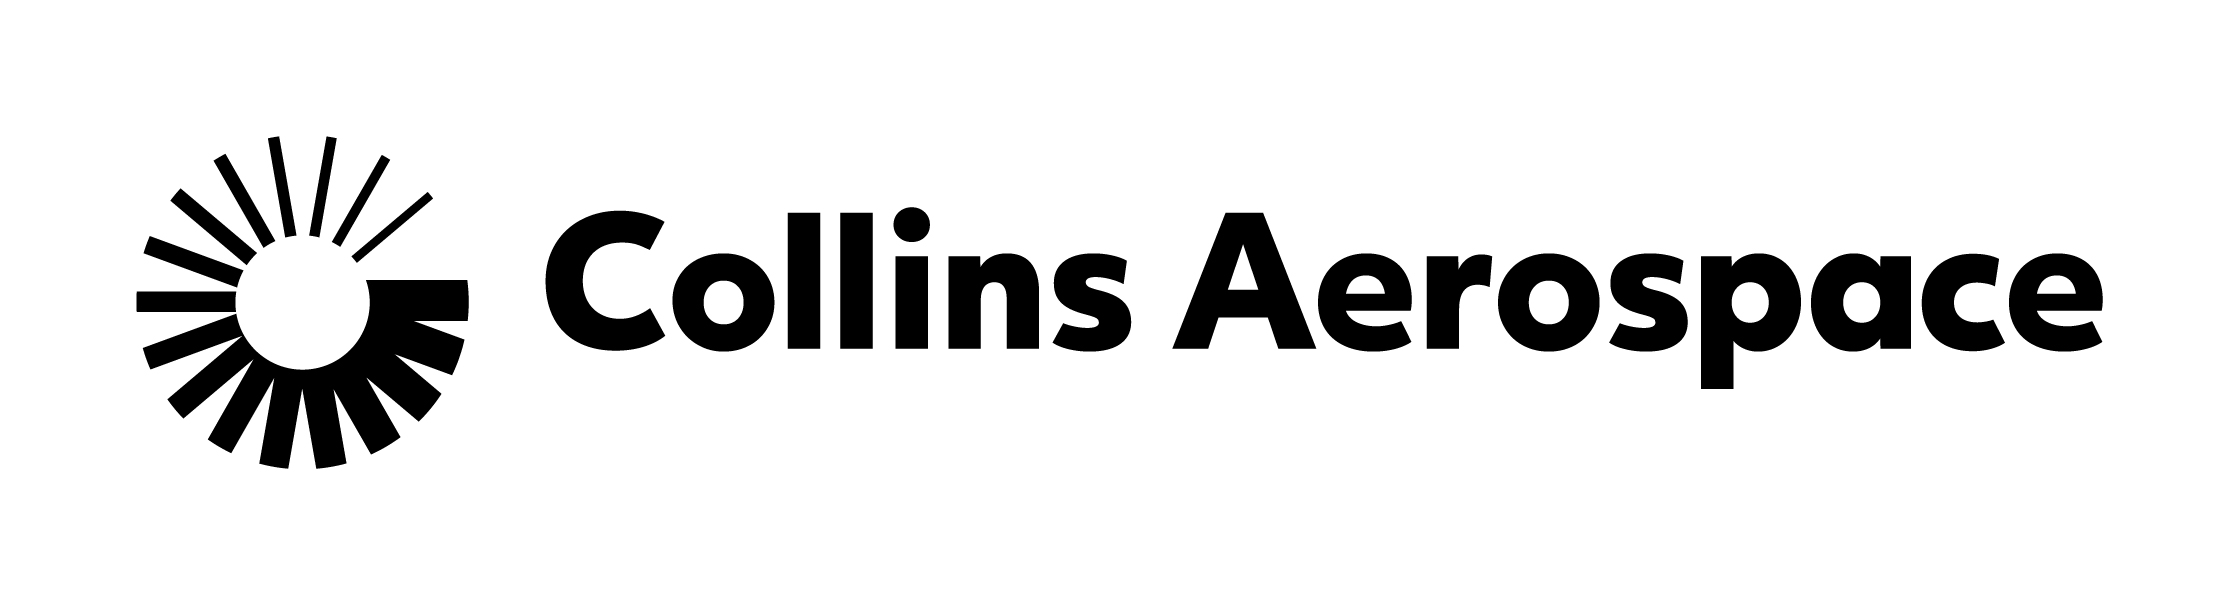 Collins_Aerospace_logo_k_rgb